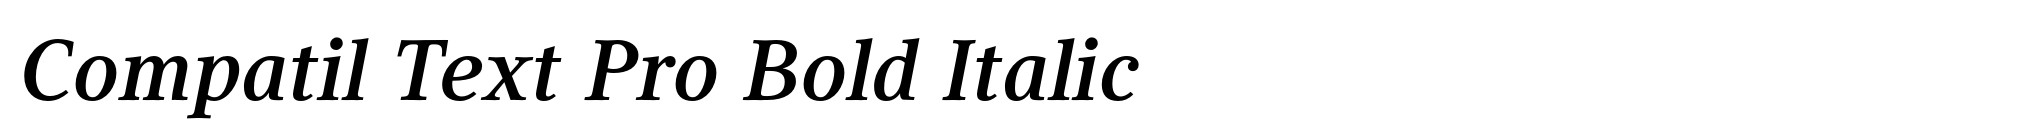 Compatil Text Pro Bold Italic image